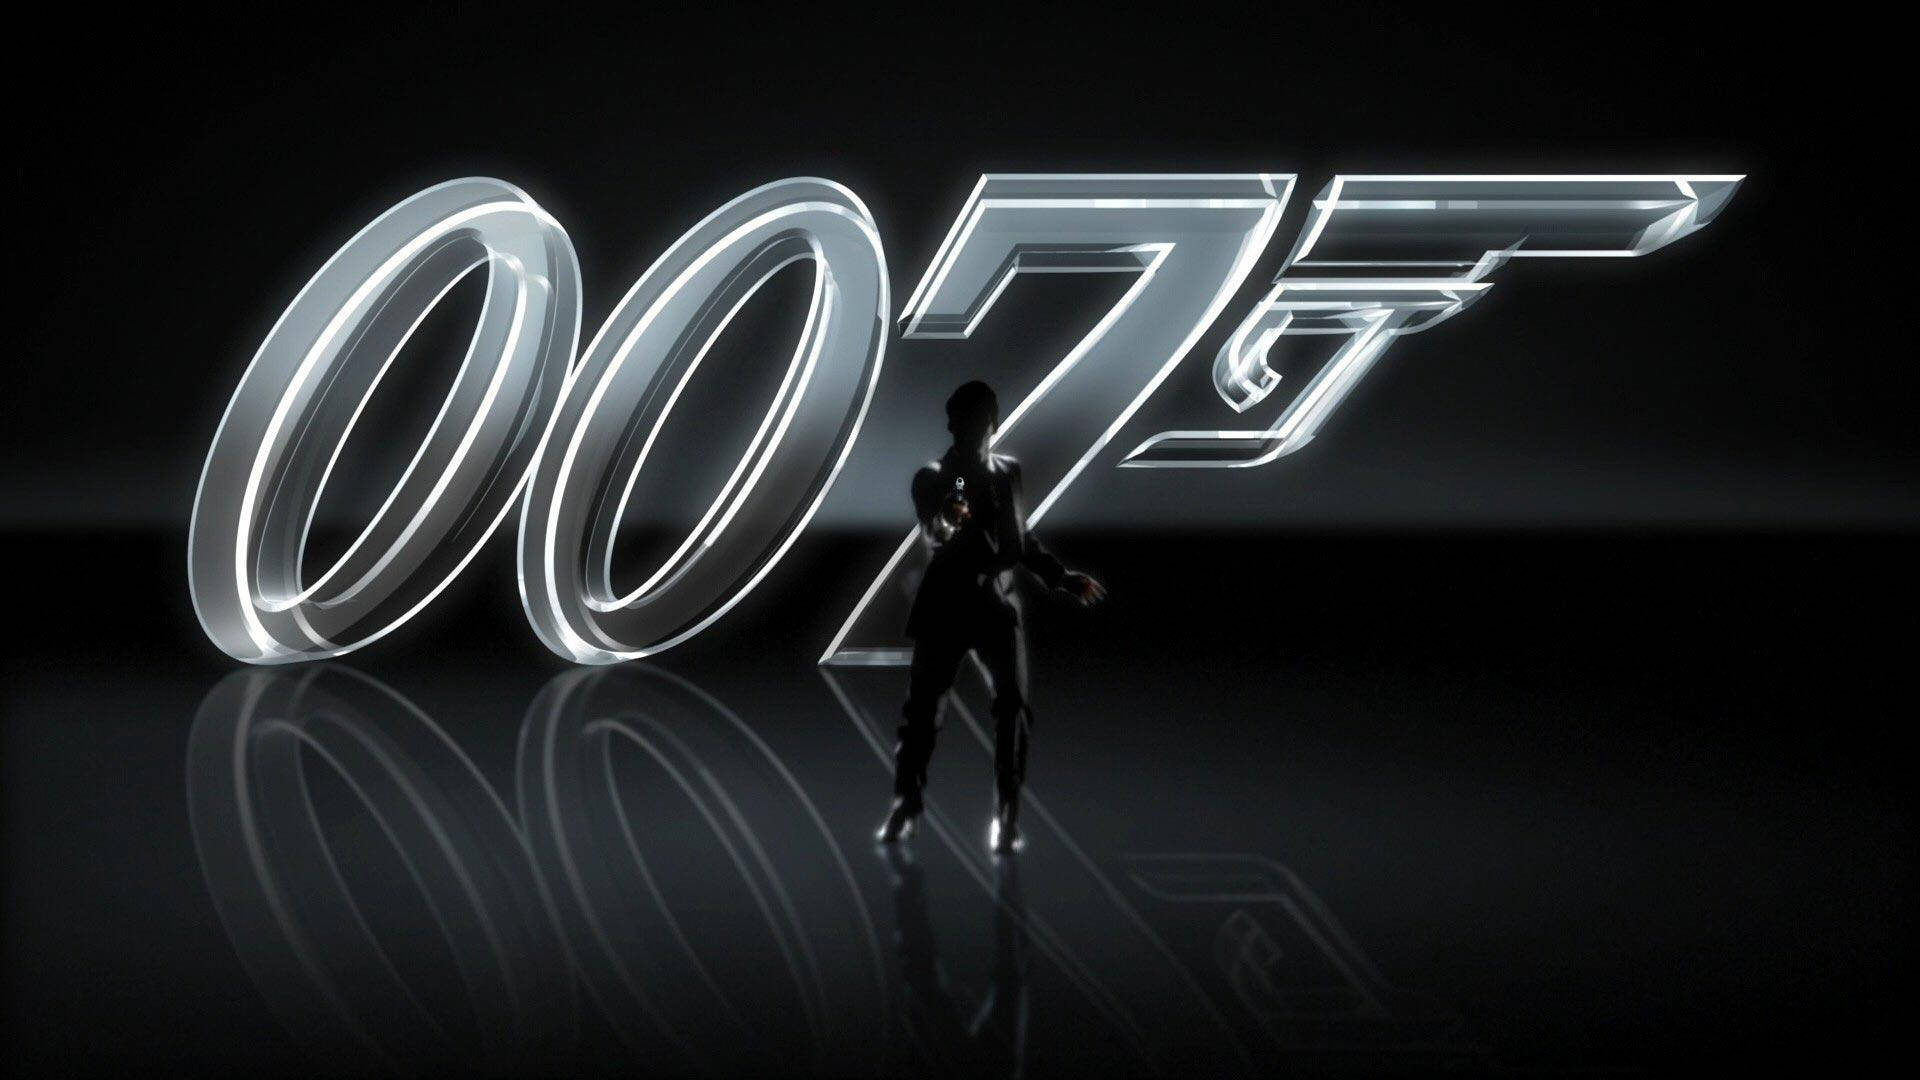 James Bond 1920 X 1080 Wallpaper